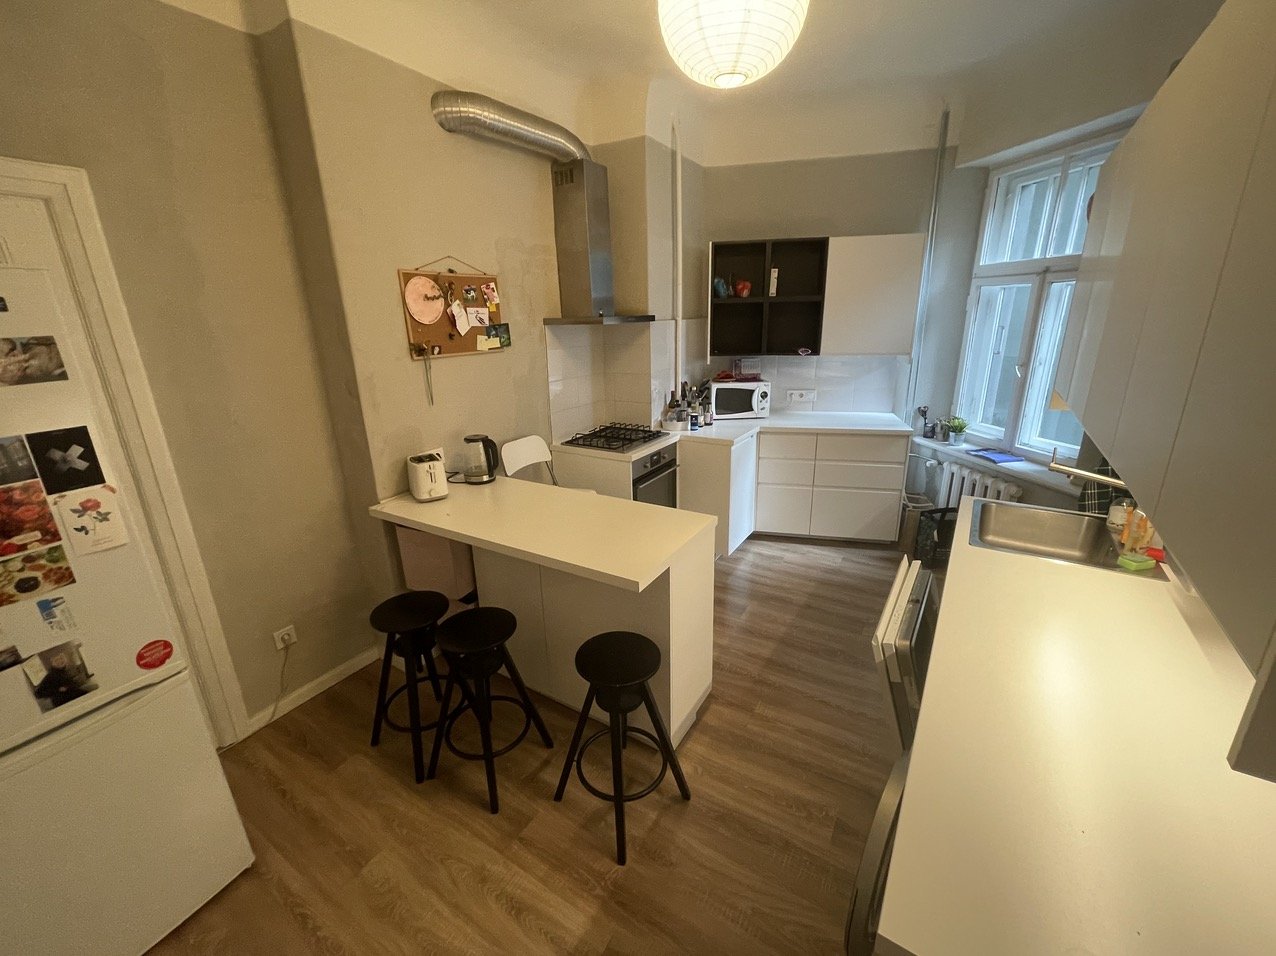 Apartment 8 kitchen